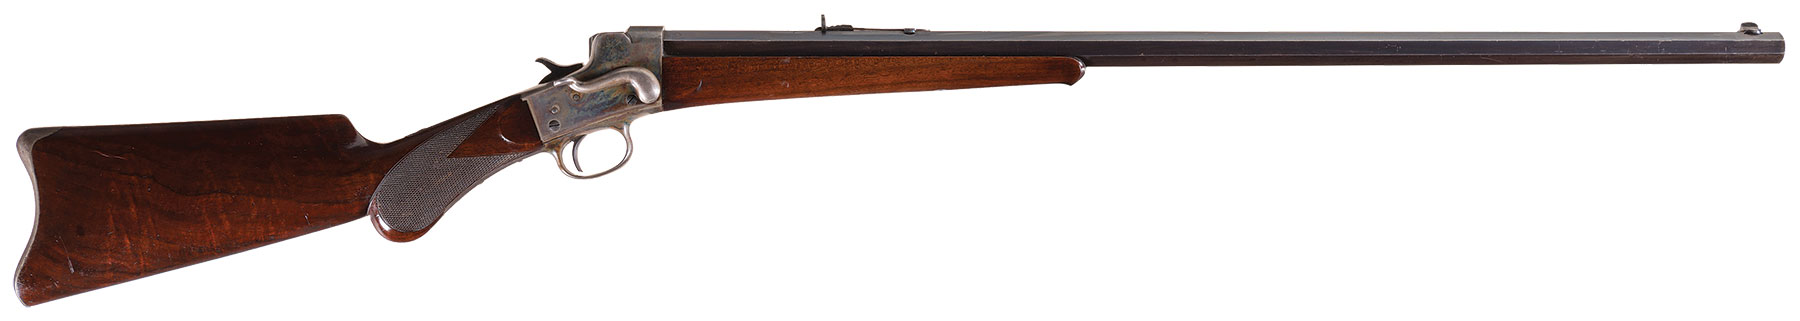 remington hepburn rifle serial numbers